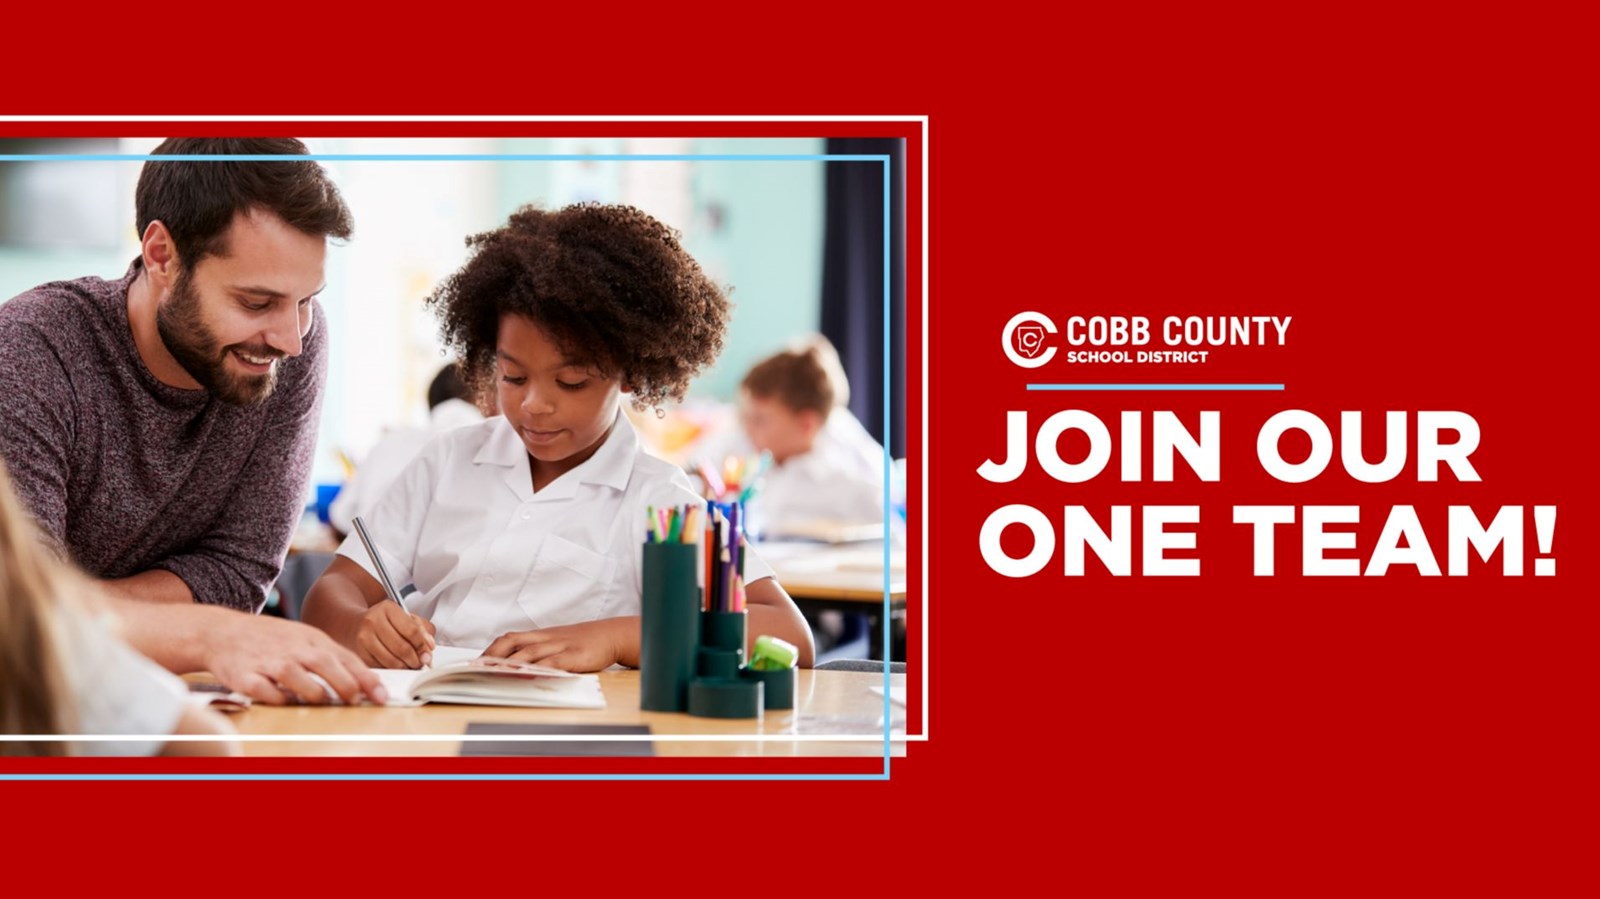 Cobb Schools is hiring